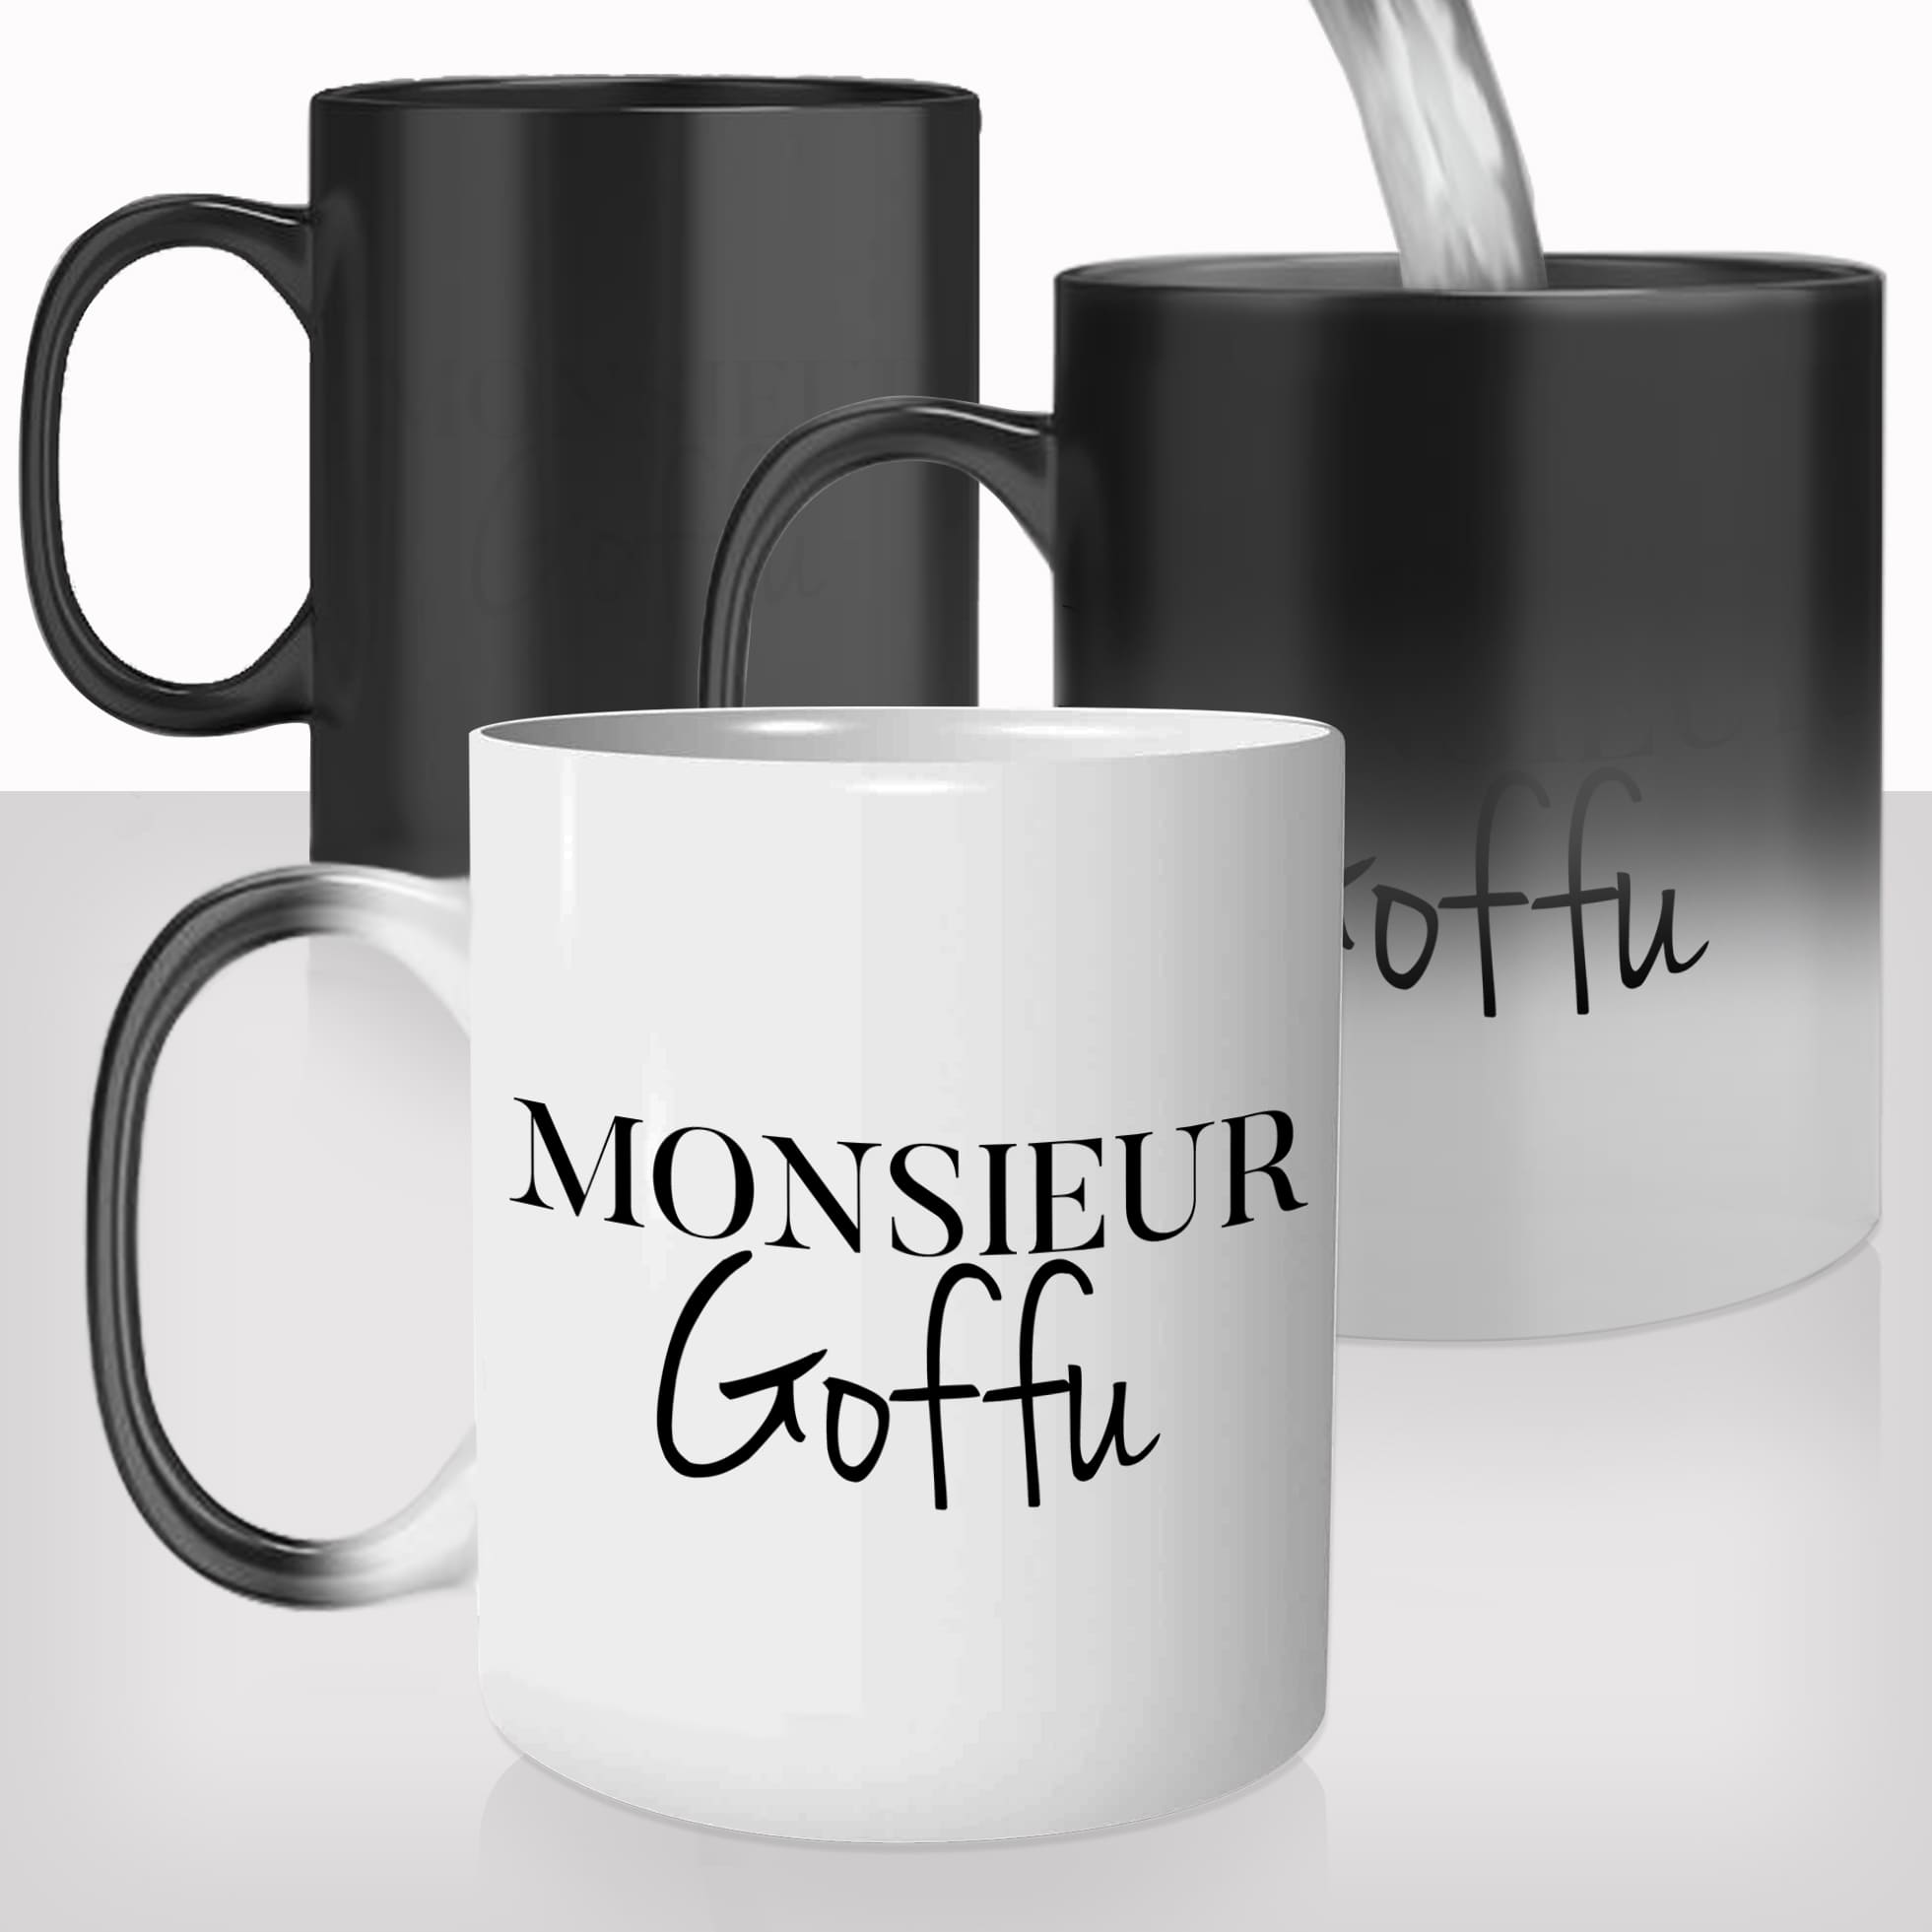 Mug Magique Monsieur Goffu